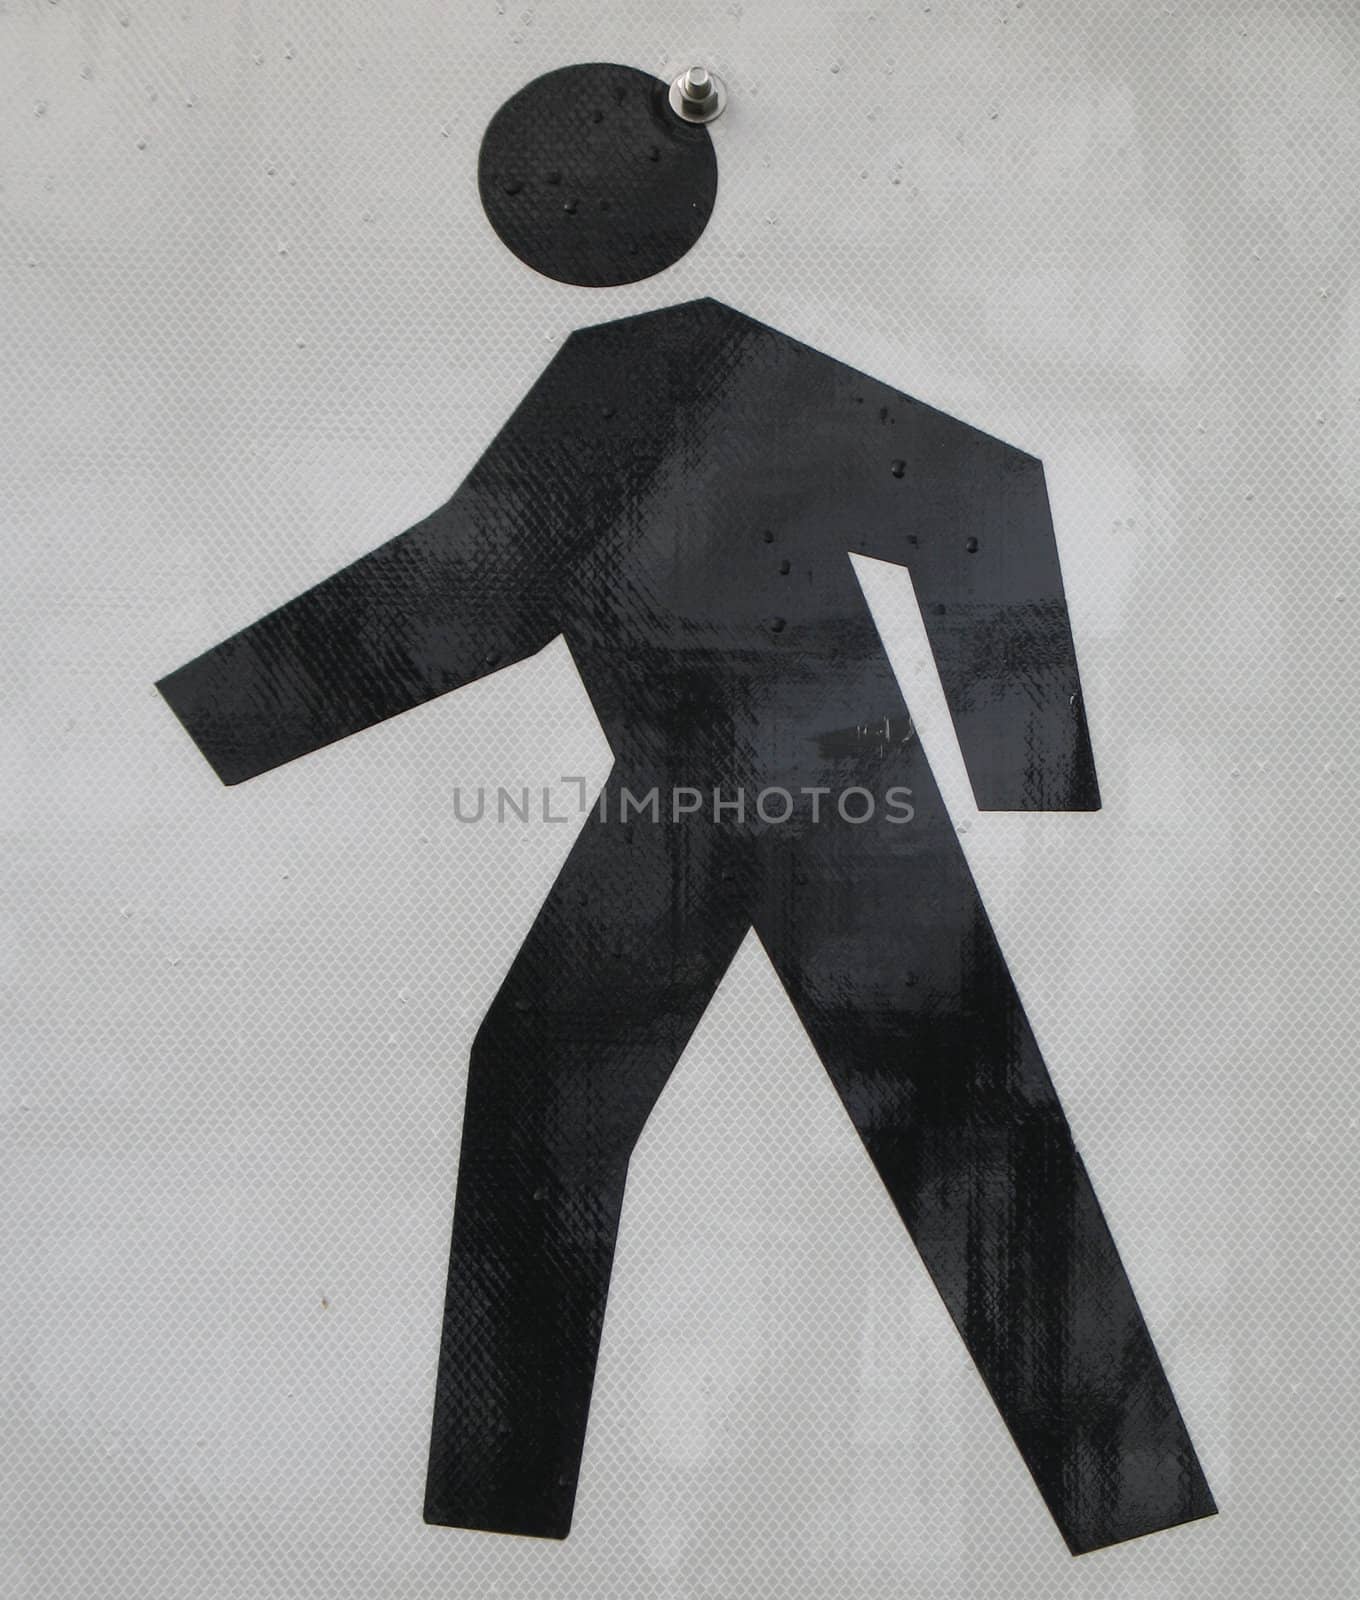 pedestrian sign by mmm